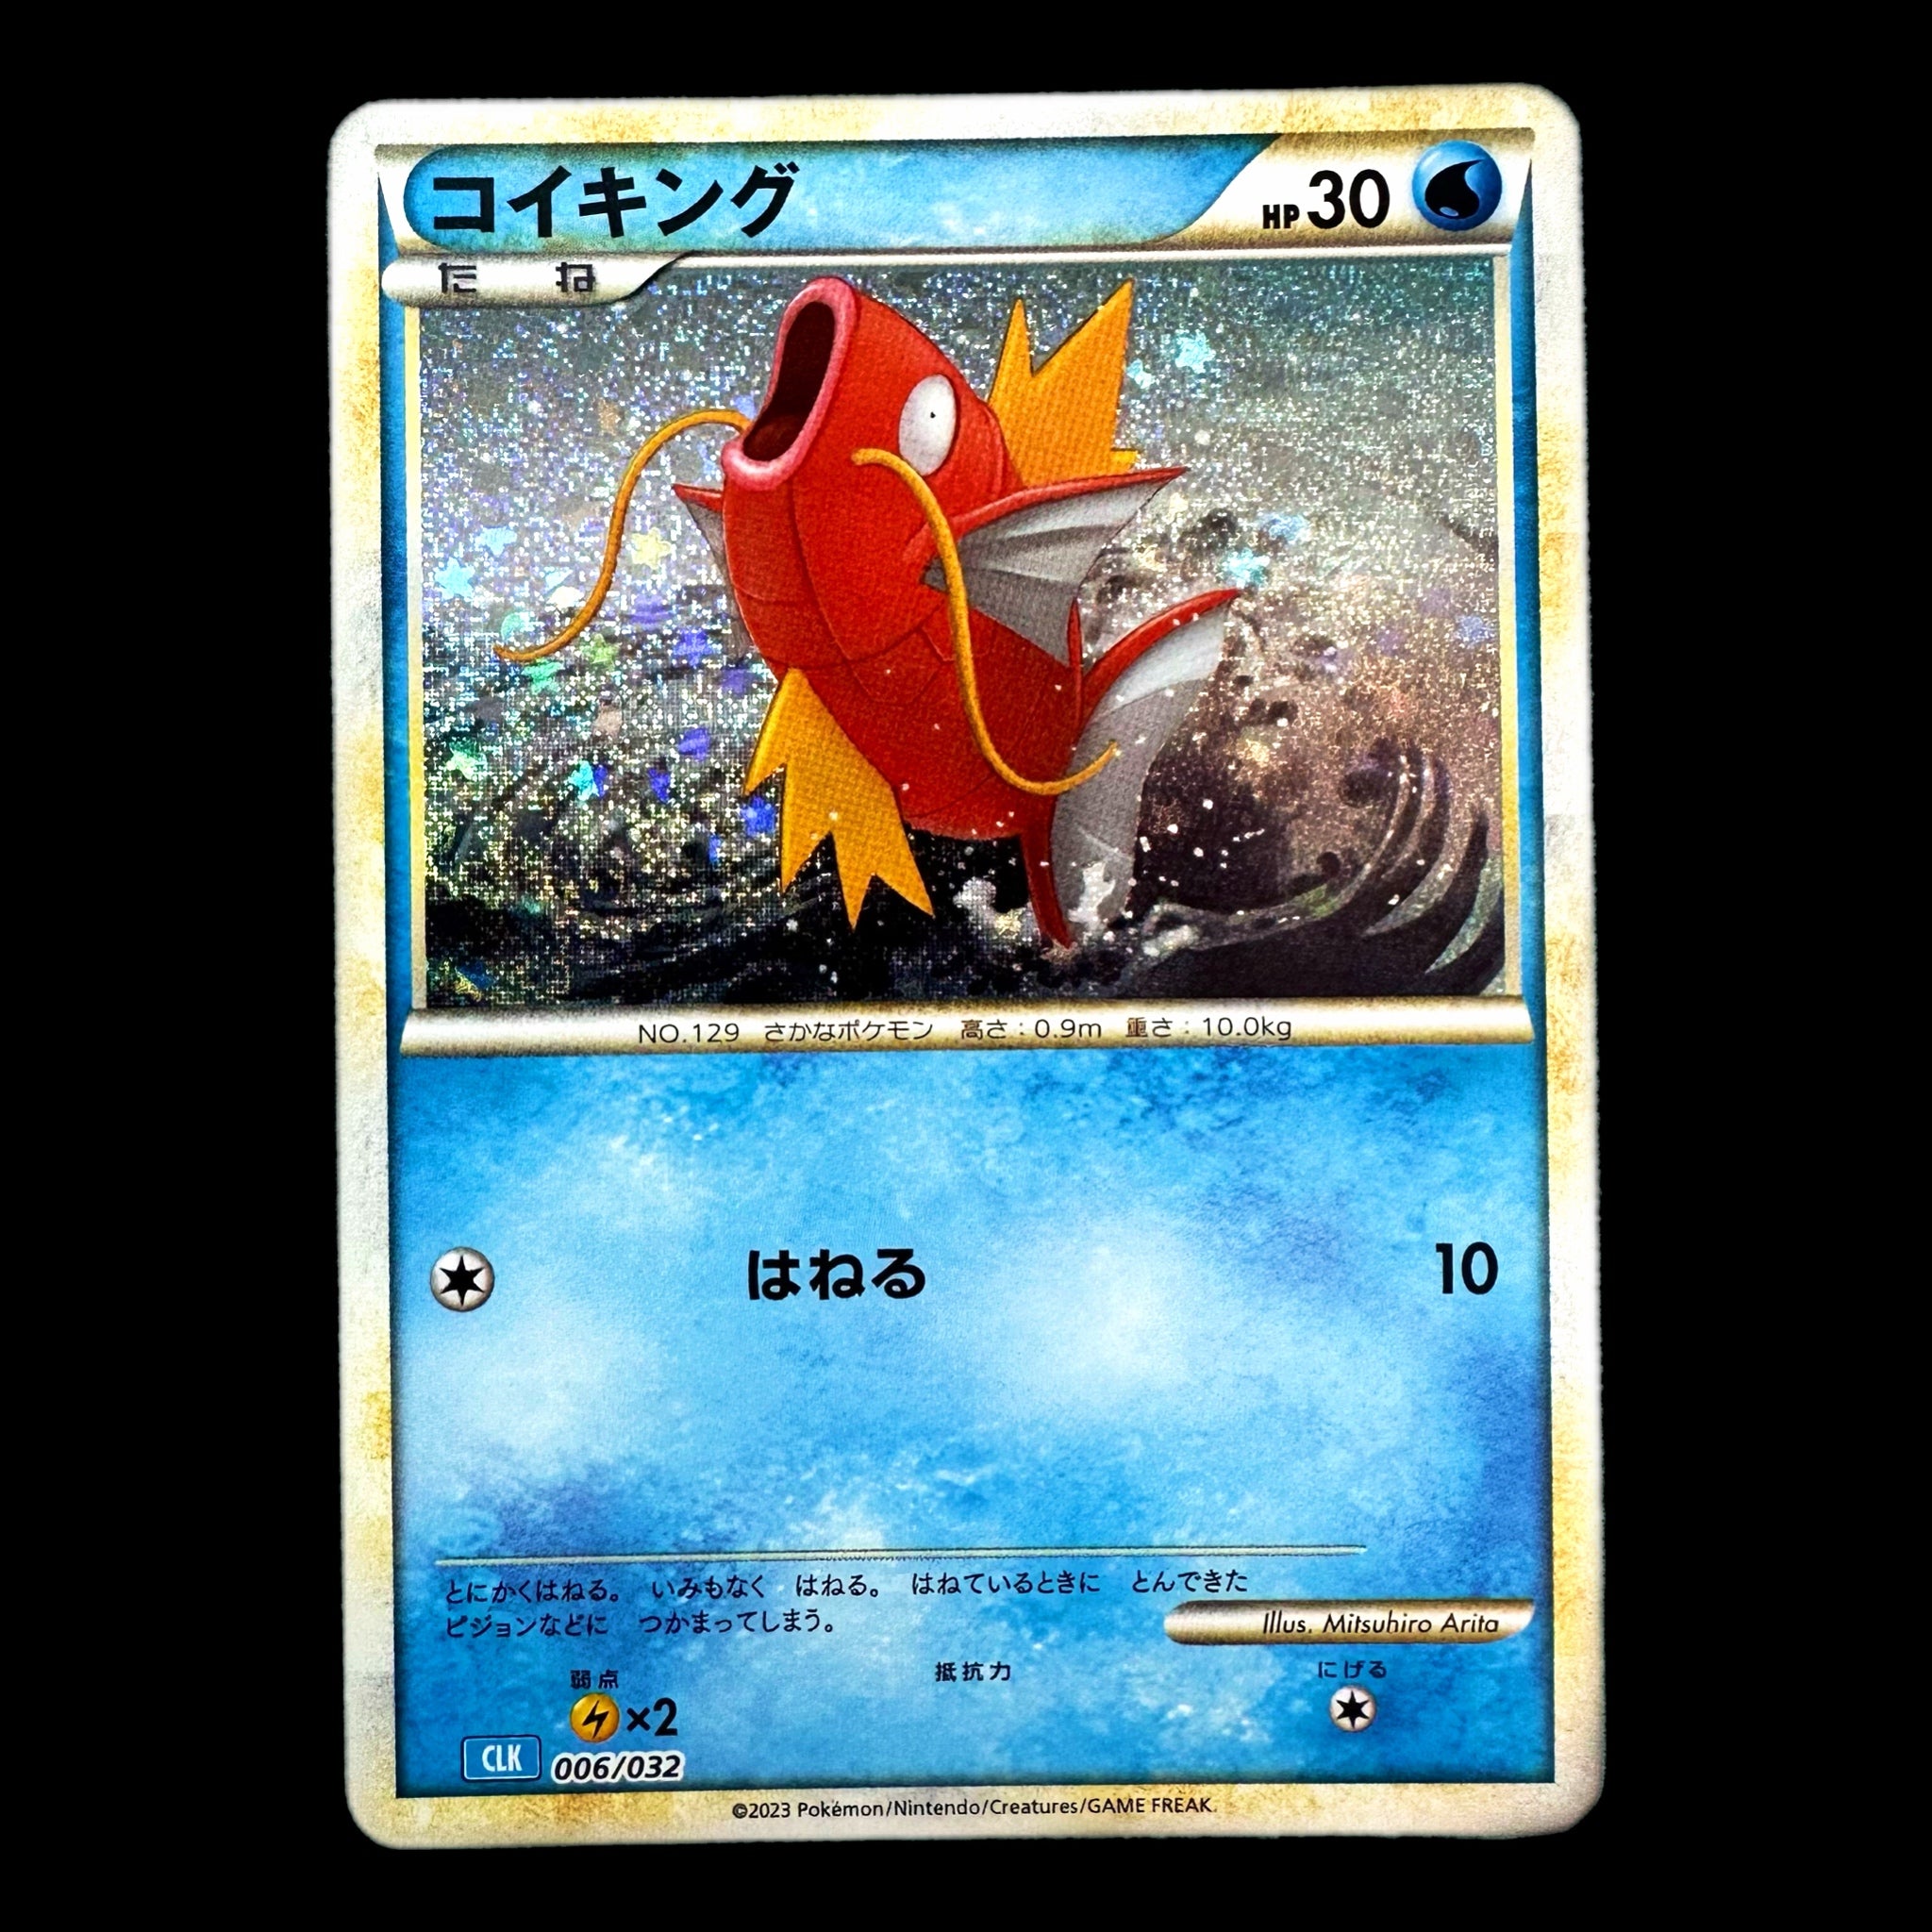 Pokémon Card Game CLL 007/032